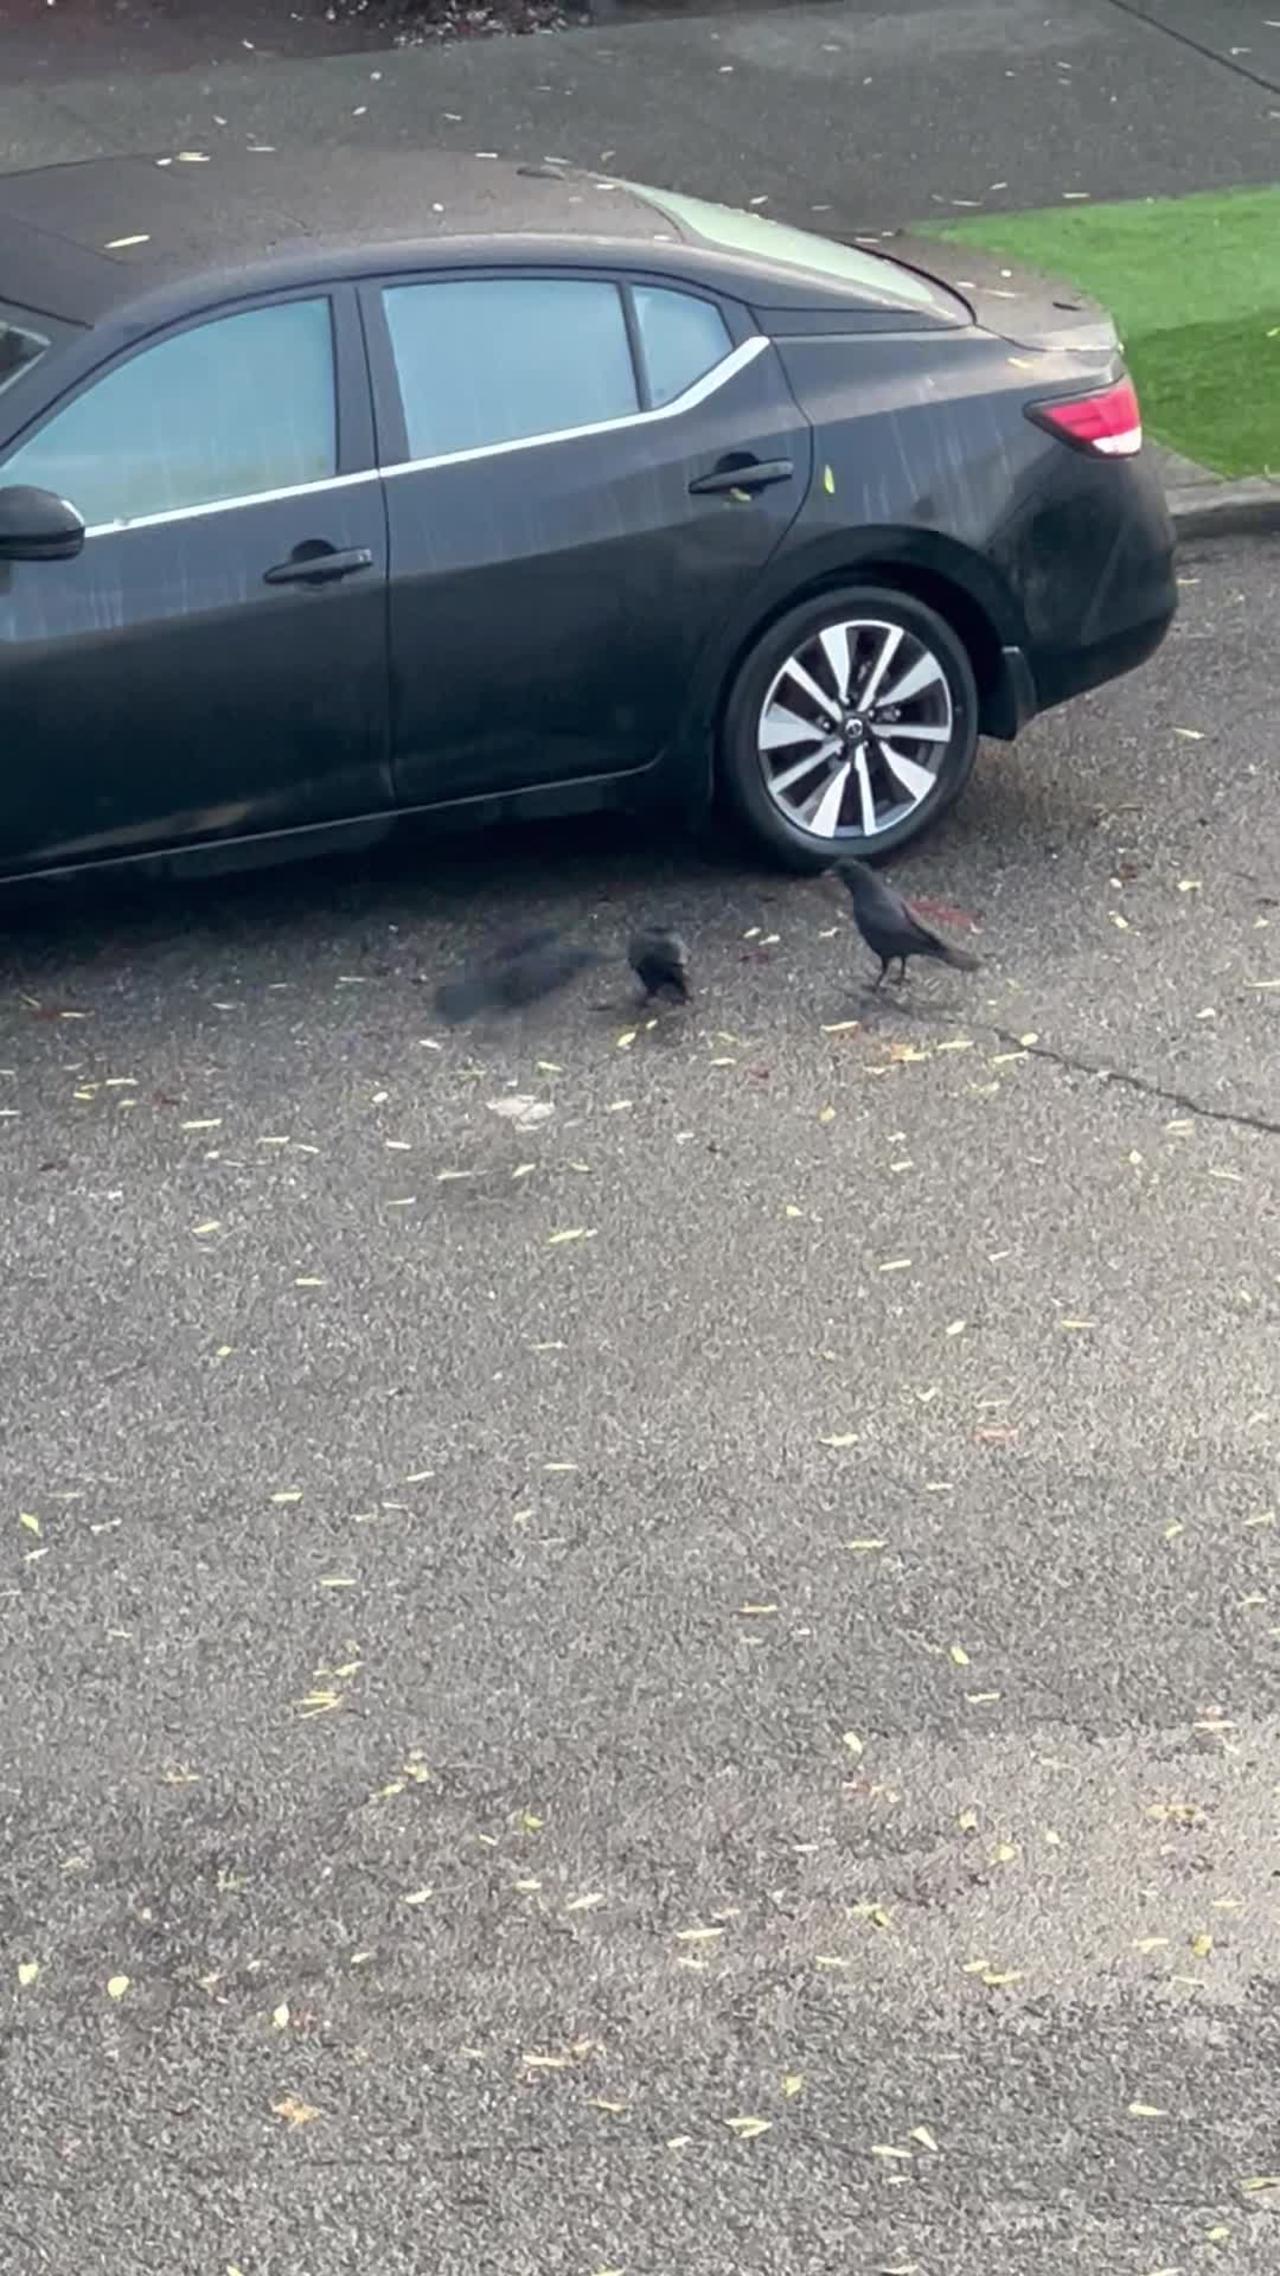 Bird Drops Rock on Car